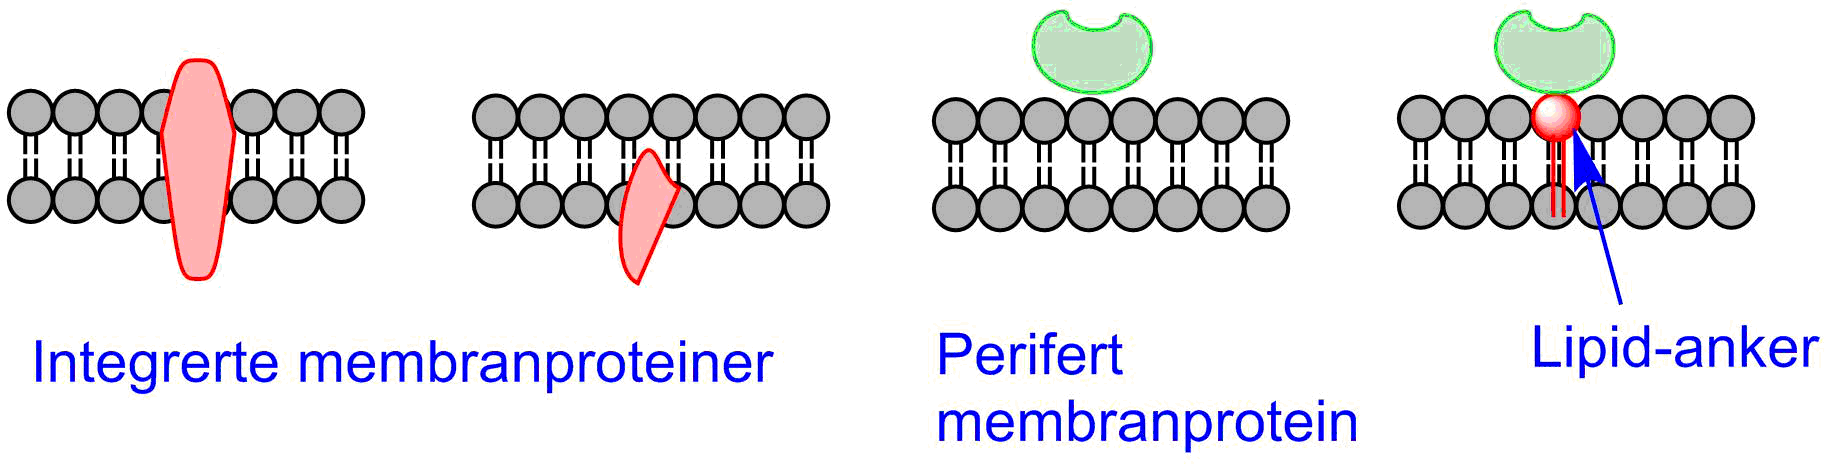 Membranproteiner